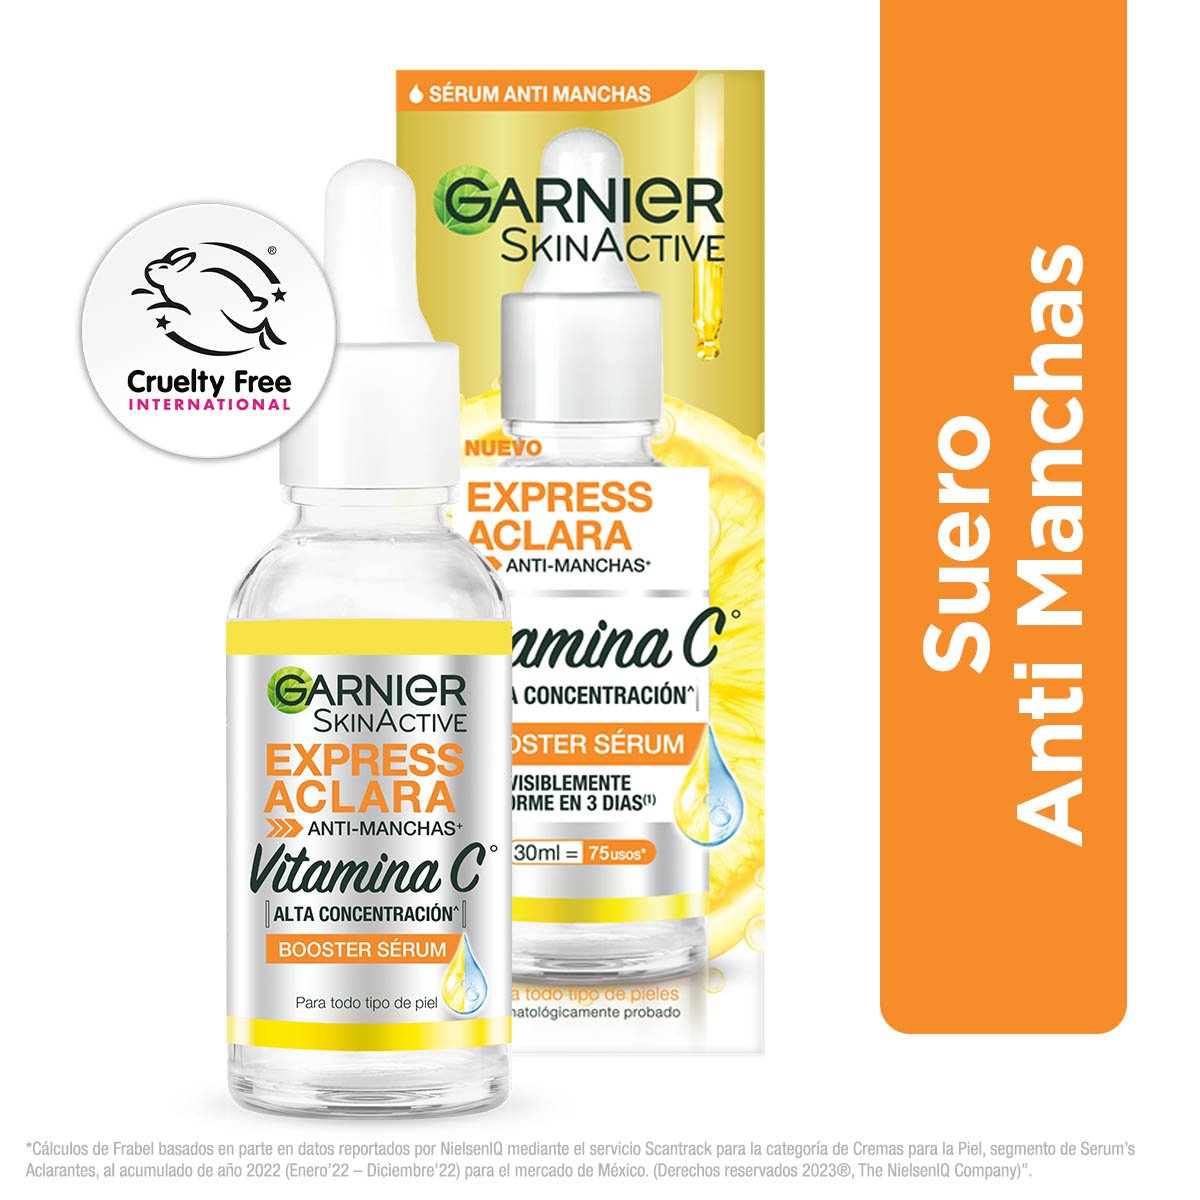 Frente del envase del  producto, Serum anti manchas con Vitamina C